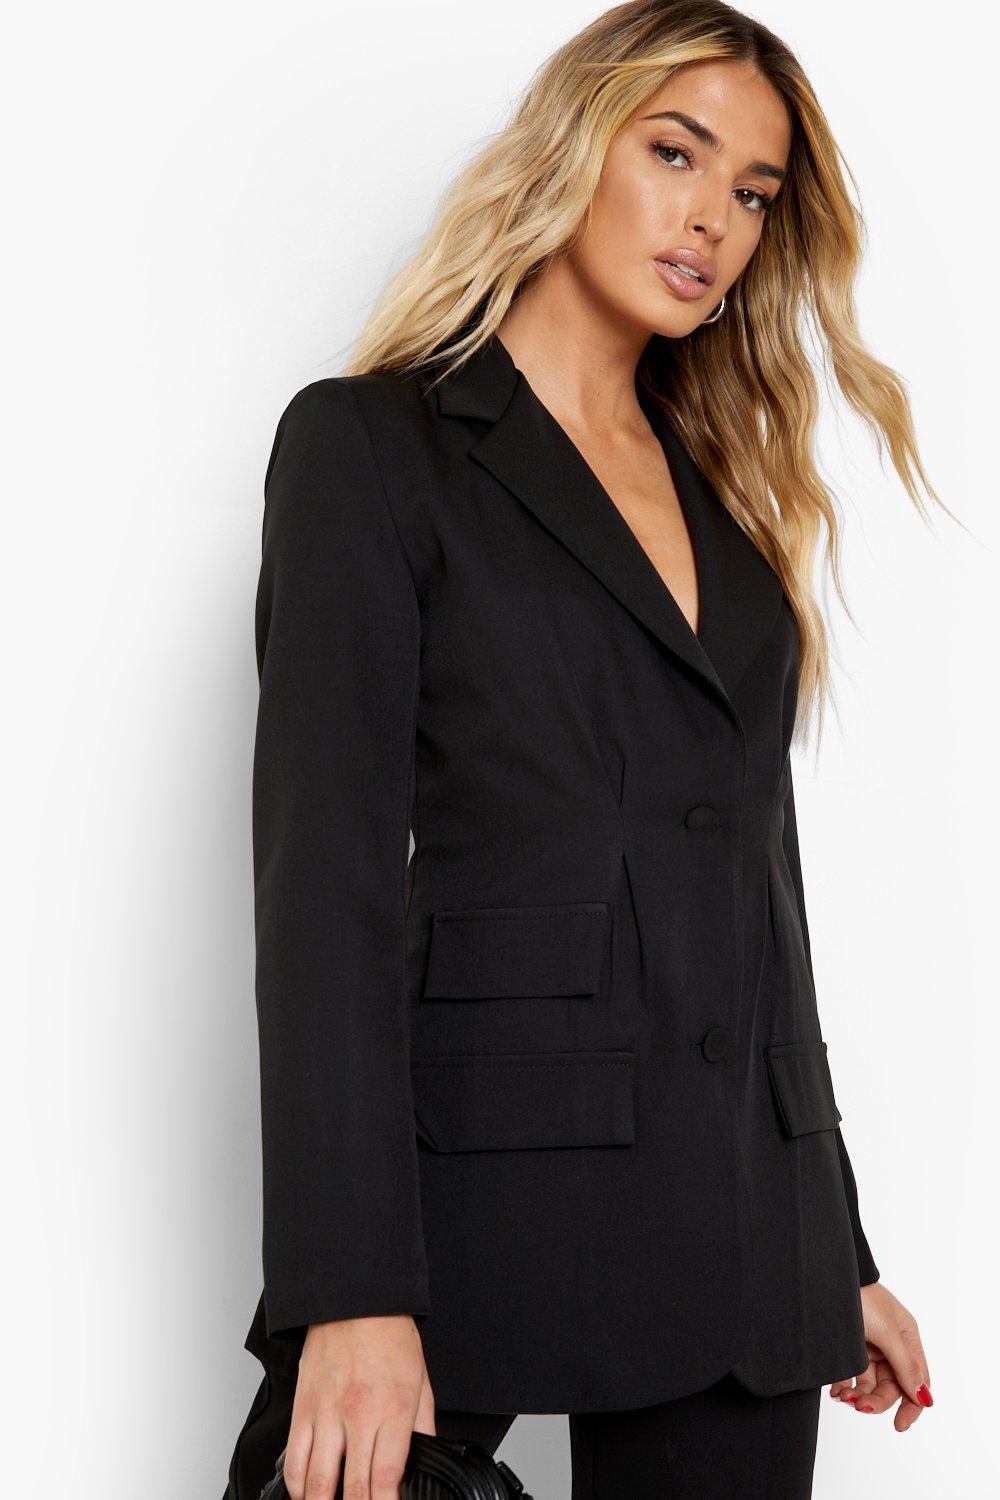 https://media.boohoo.com/i/boohoo/fzz38462_black_xl_3/female-black-contour-waist-tailored-blazer